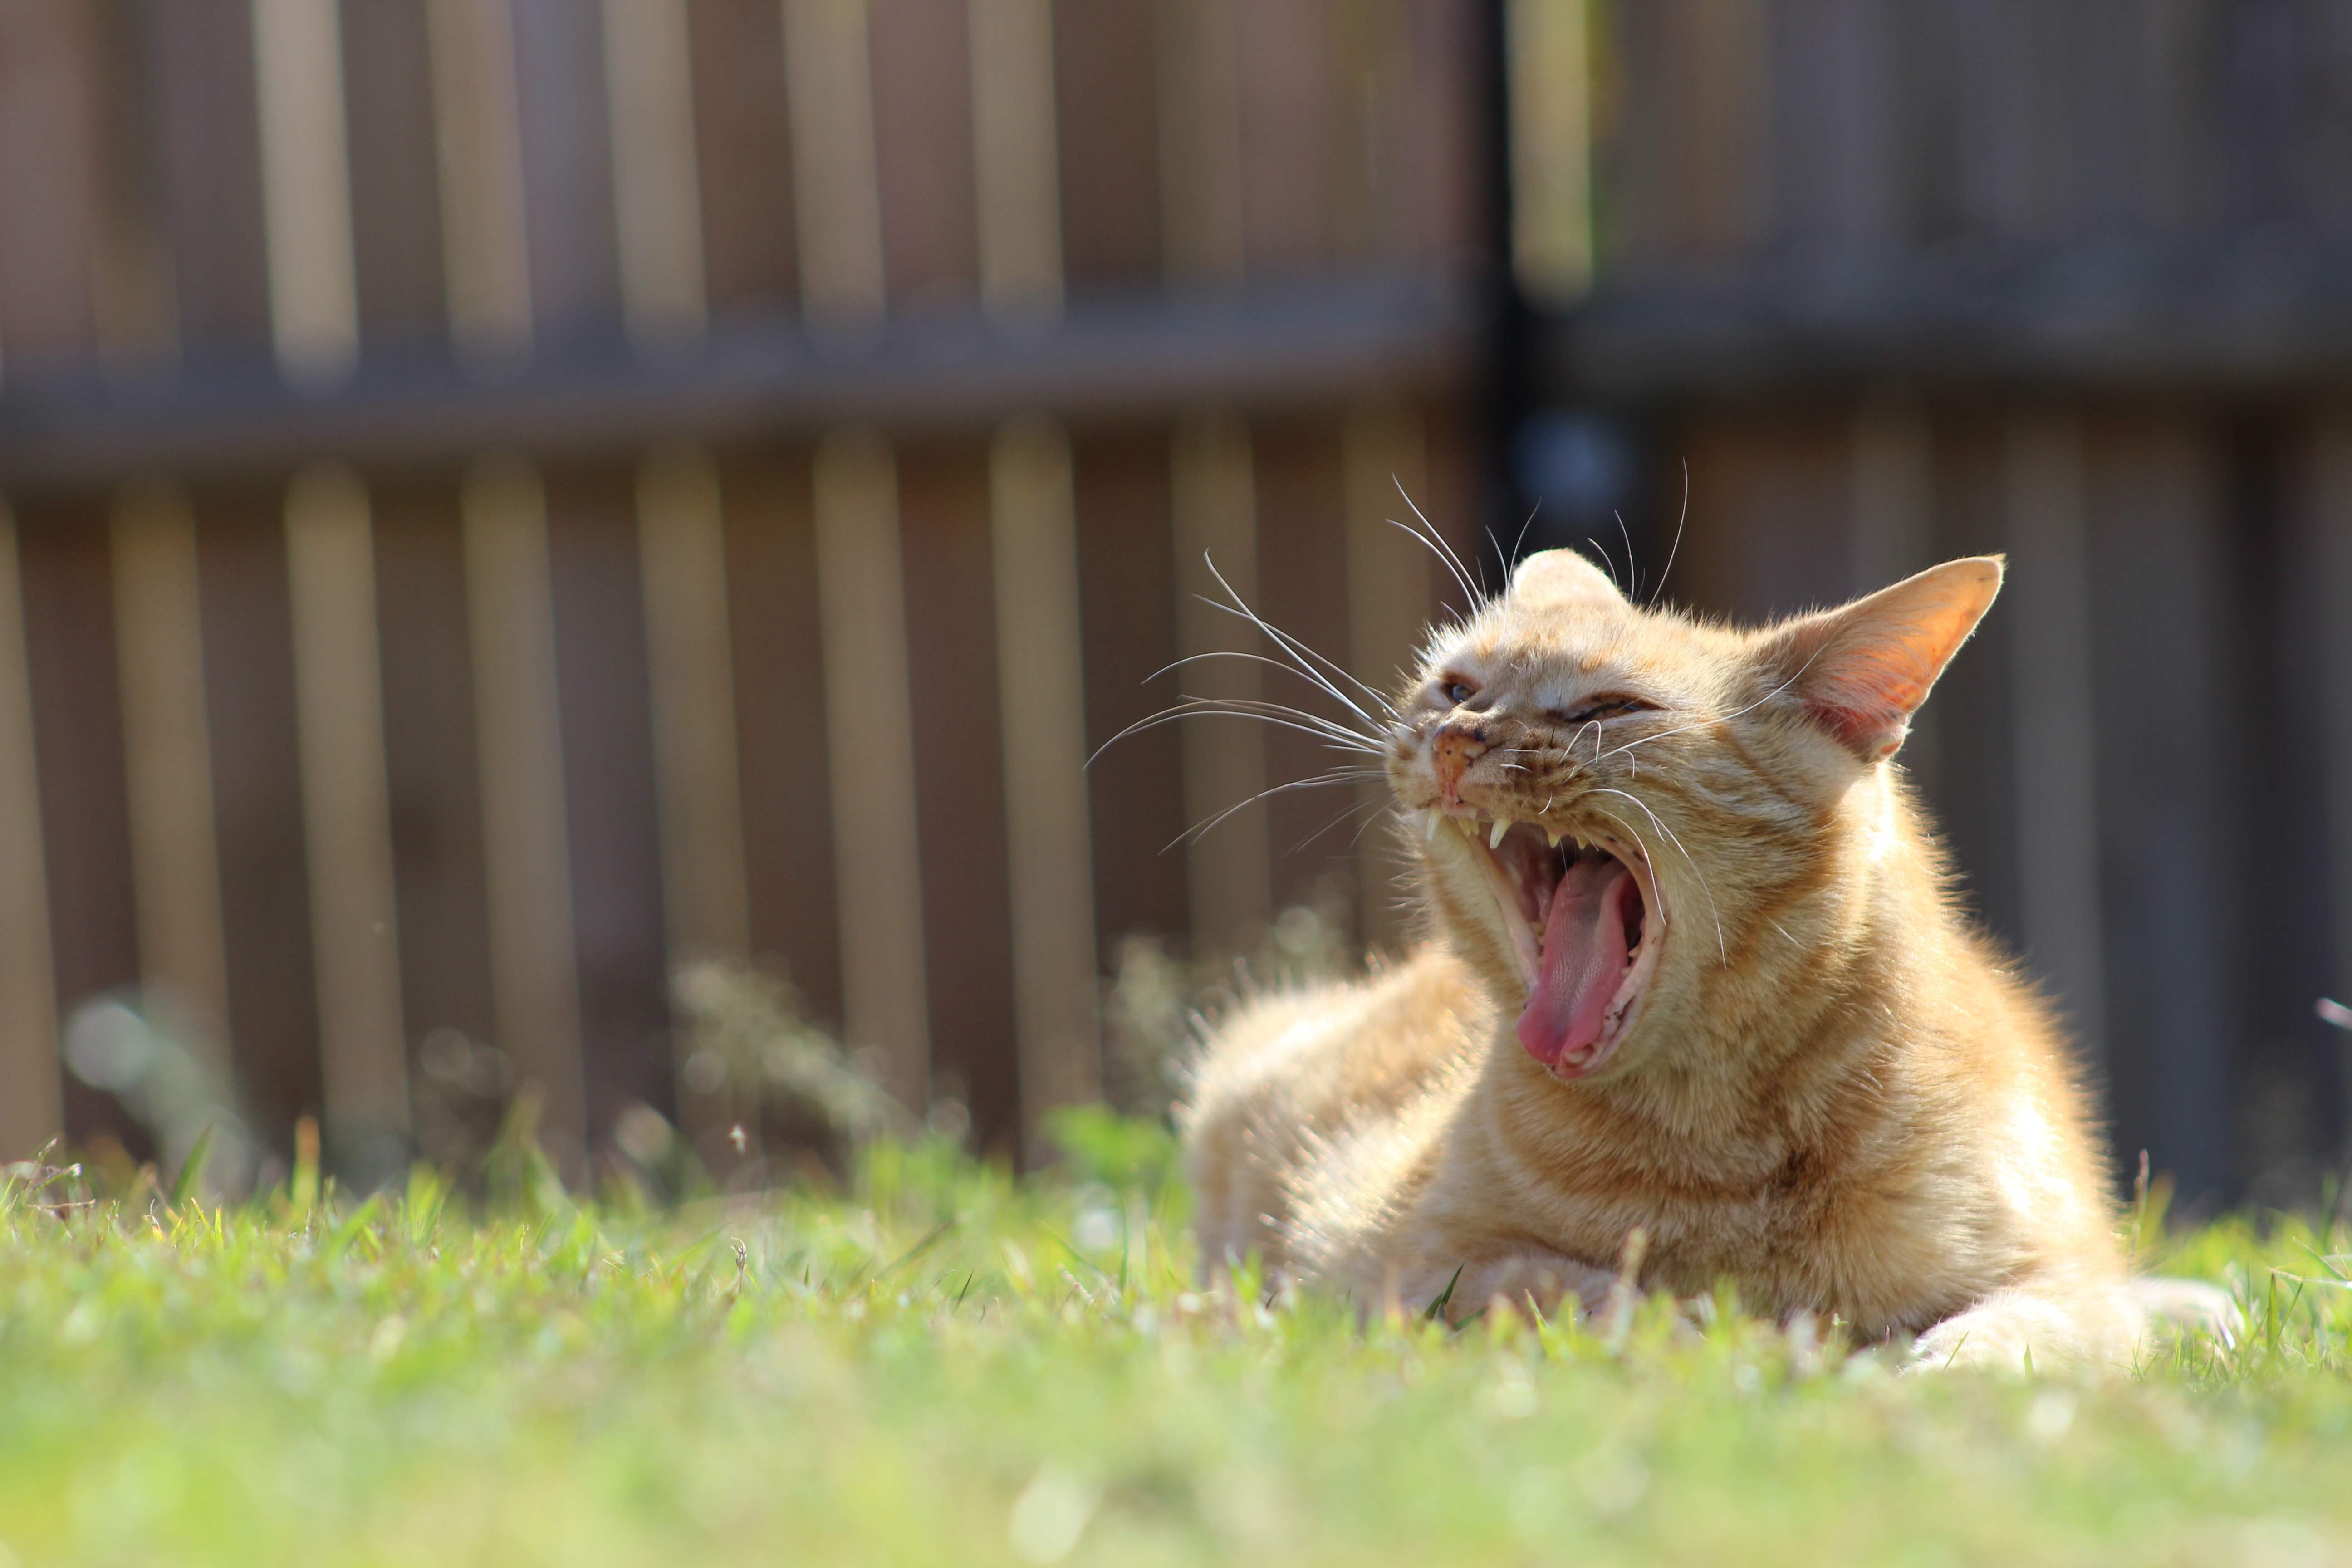 General 5184x3456 cats animals grass depth of field yawning mammals outdoors